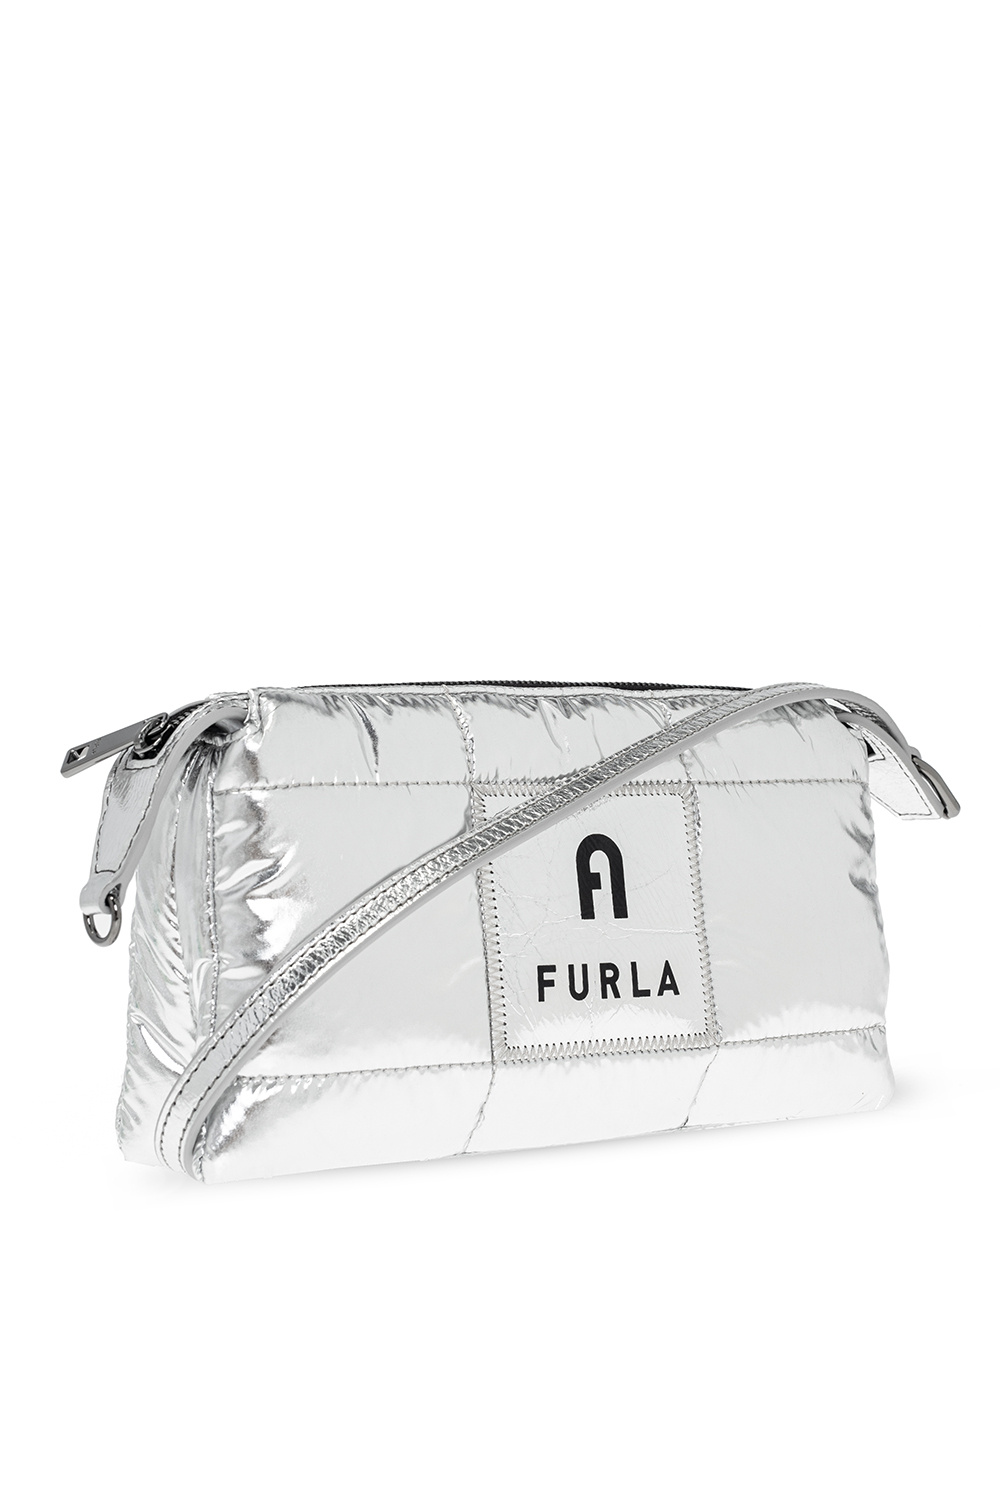  Furla 1002-PRV00 Women's Viva Mini POCHETTE Shoulder Bag,  PERVINCA g (1002-PRV00) : Clothing, Shoes & Jewelry